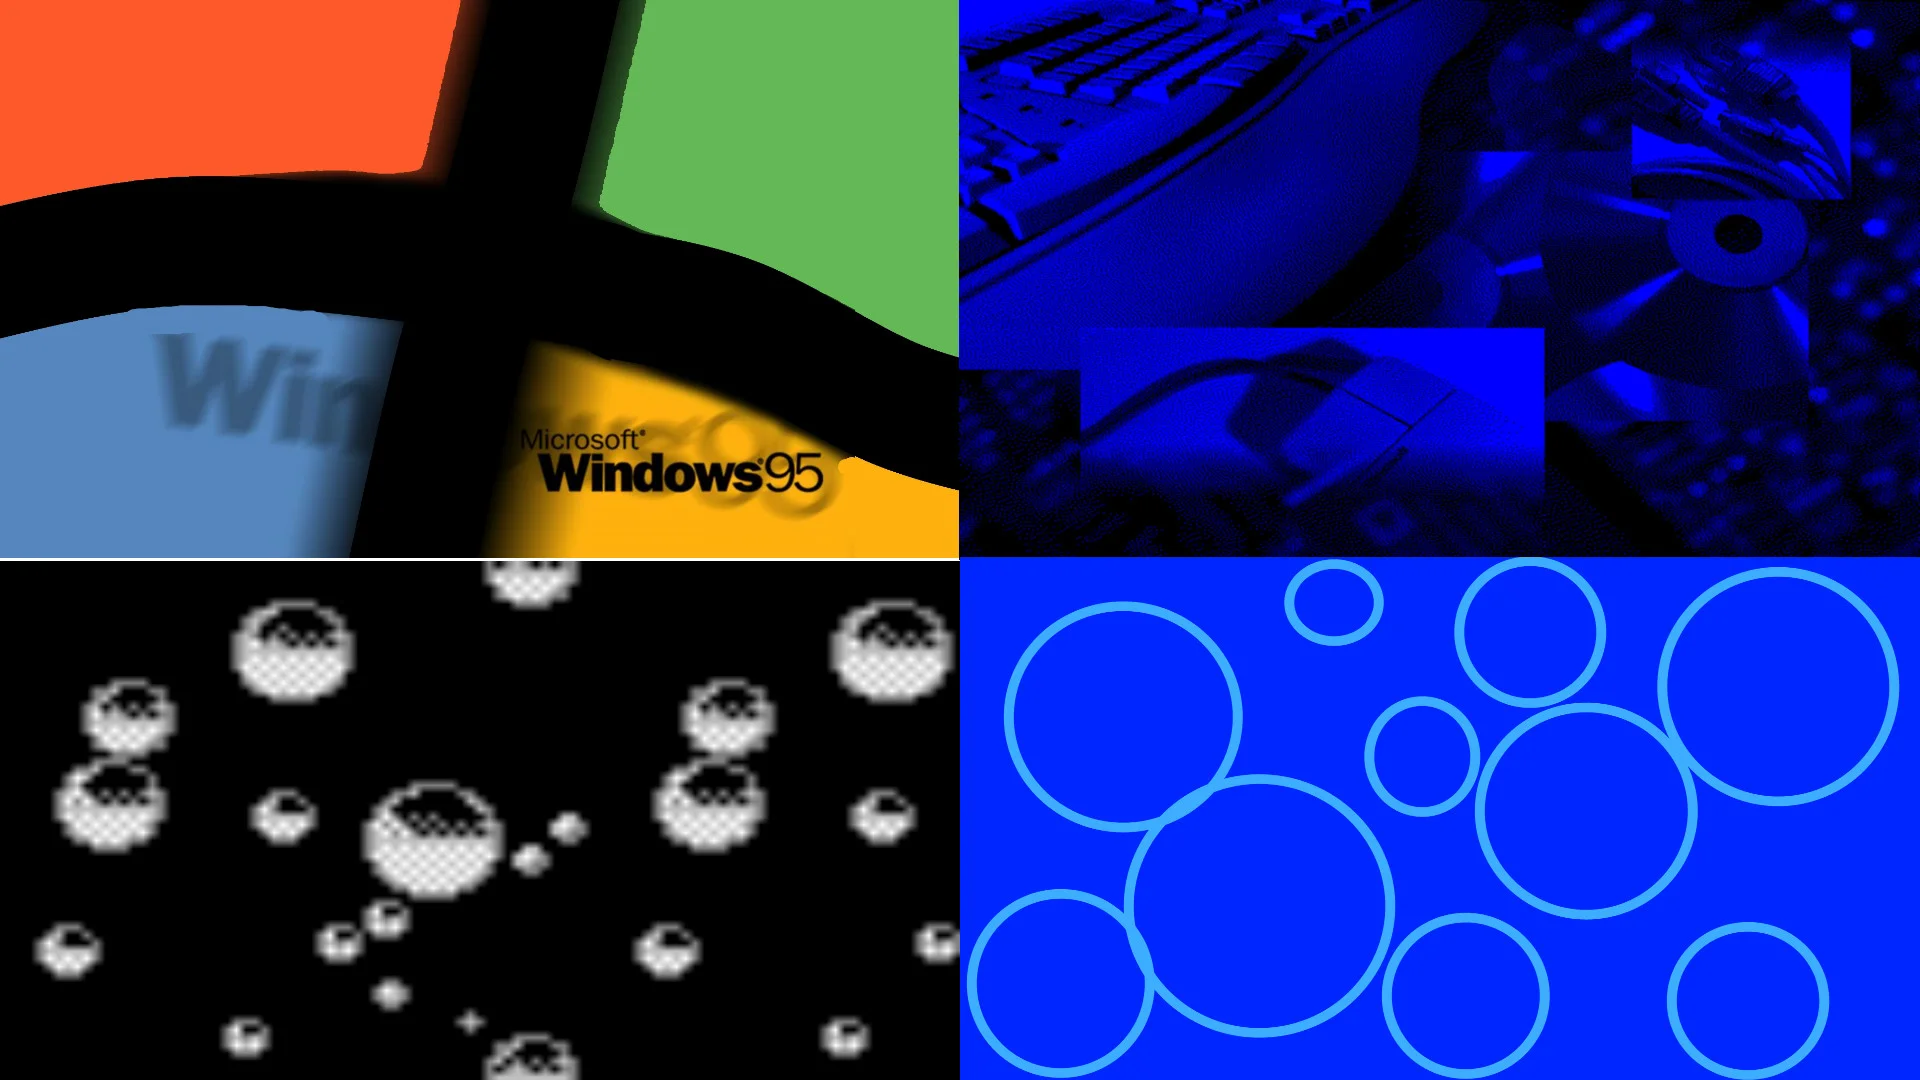 Windows 95 Wallpaper Pack